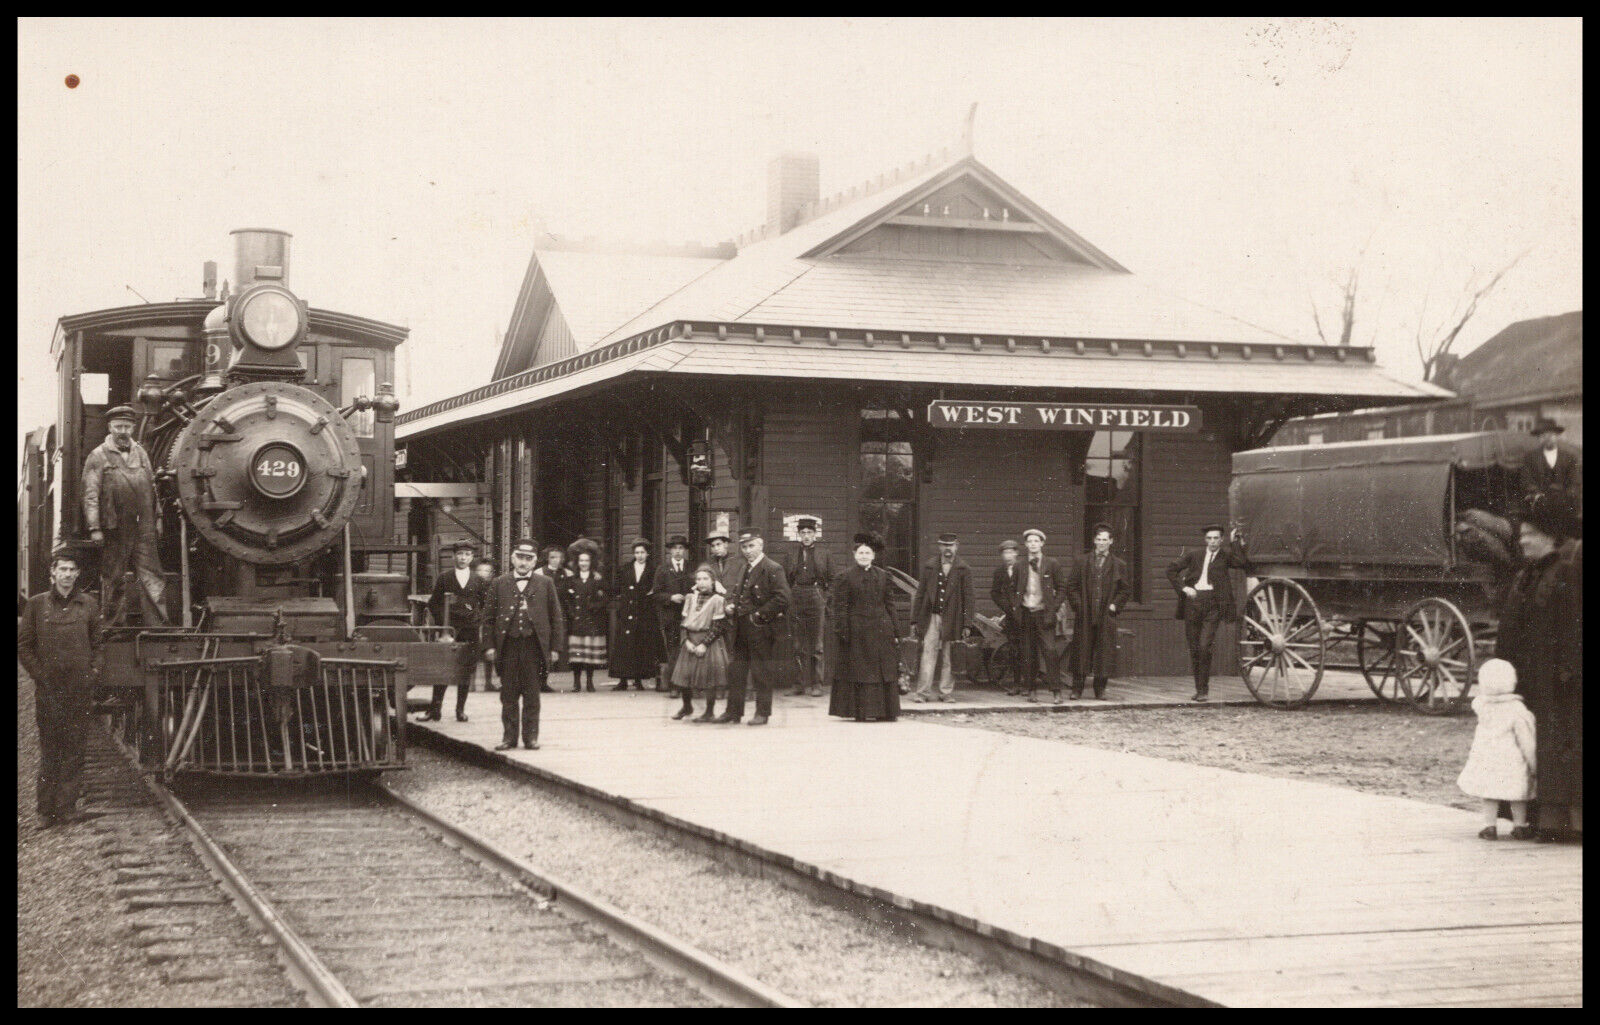 West Winfield, New York, DL & W Railroad Depot, Real Photo Postcard, RPPC